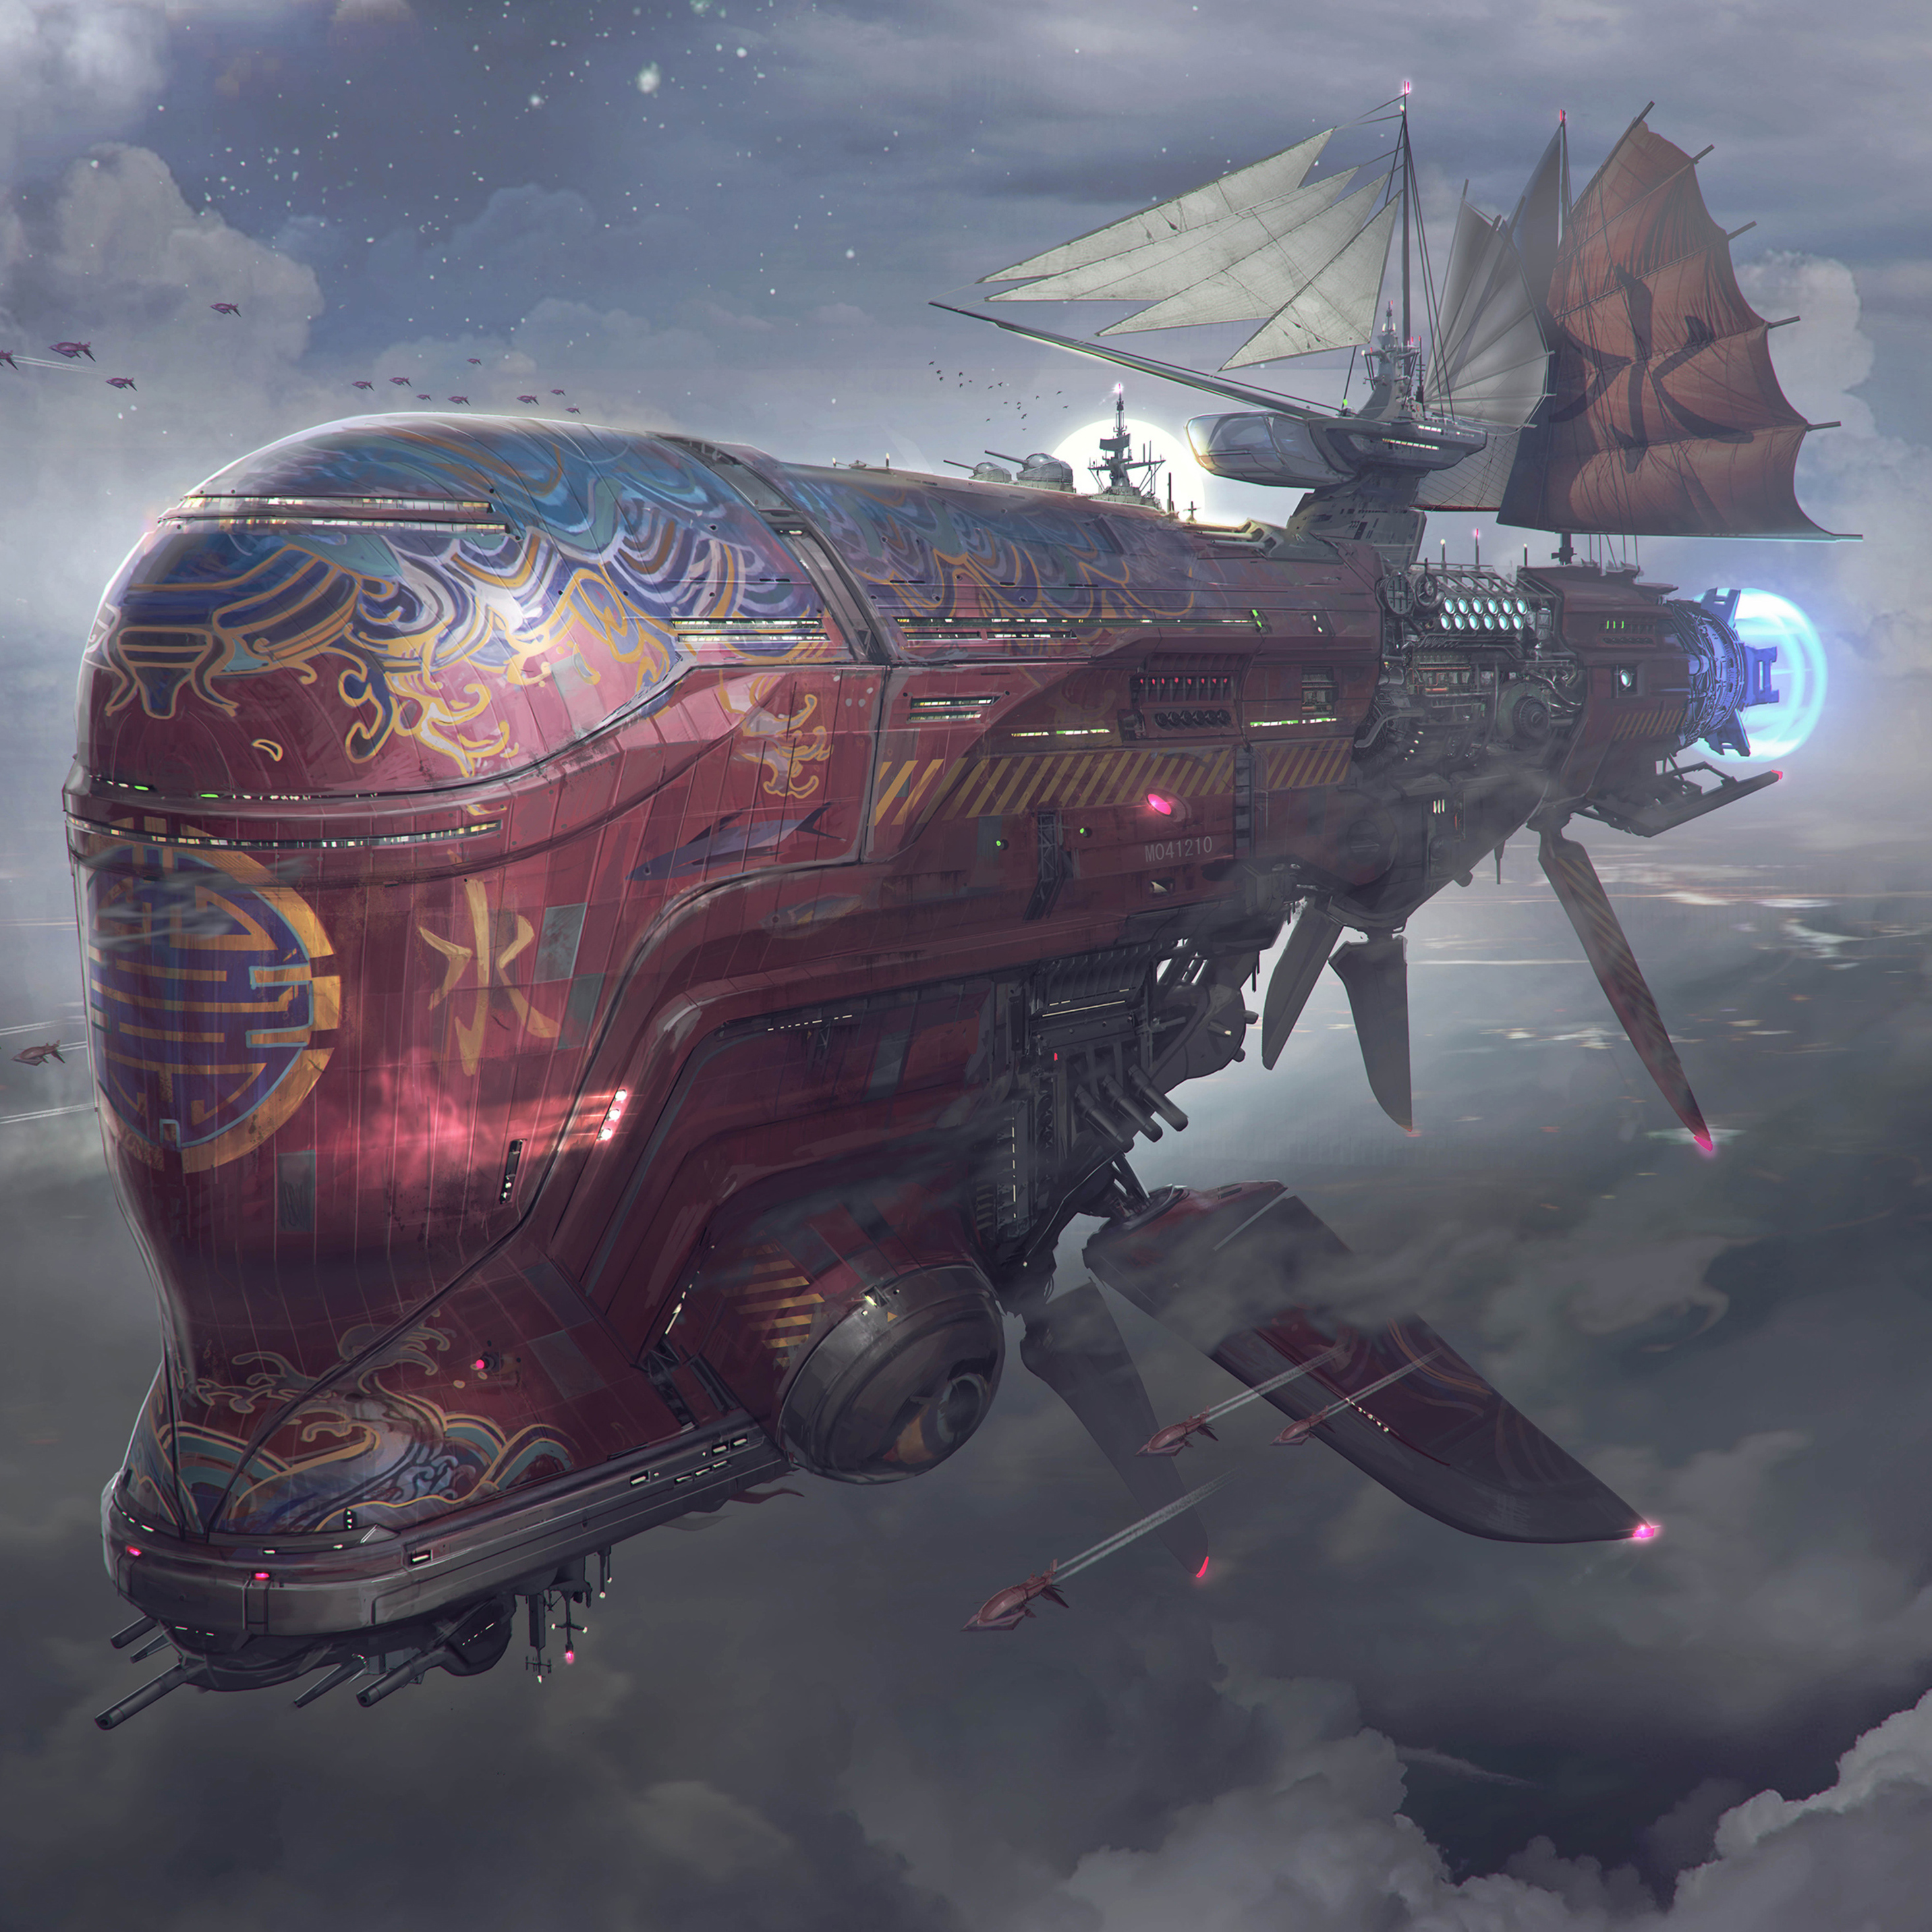 beyond-good-and-evil-2-spaceship-cyberpunk-2g.jpg